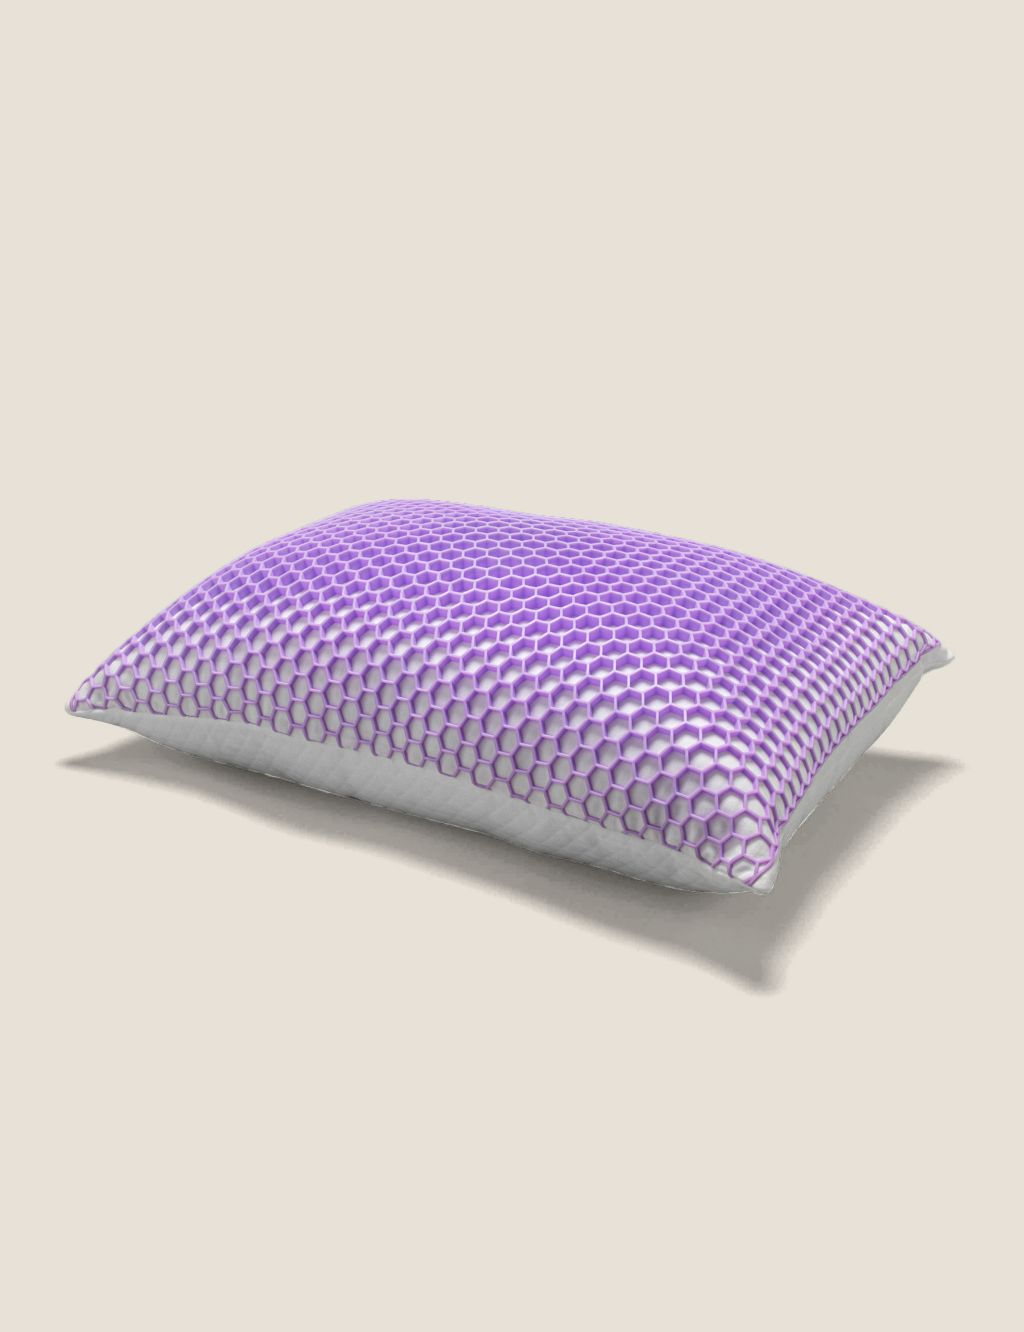 Honeycomb Super Cool Medium Pillow image 2